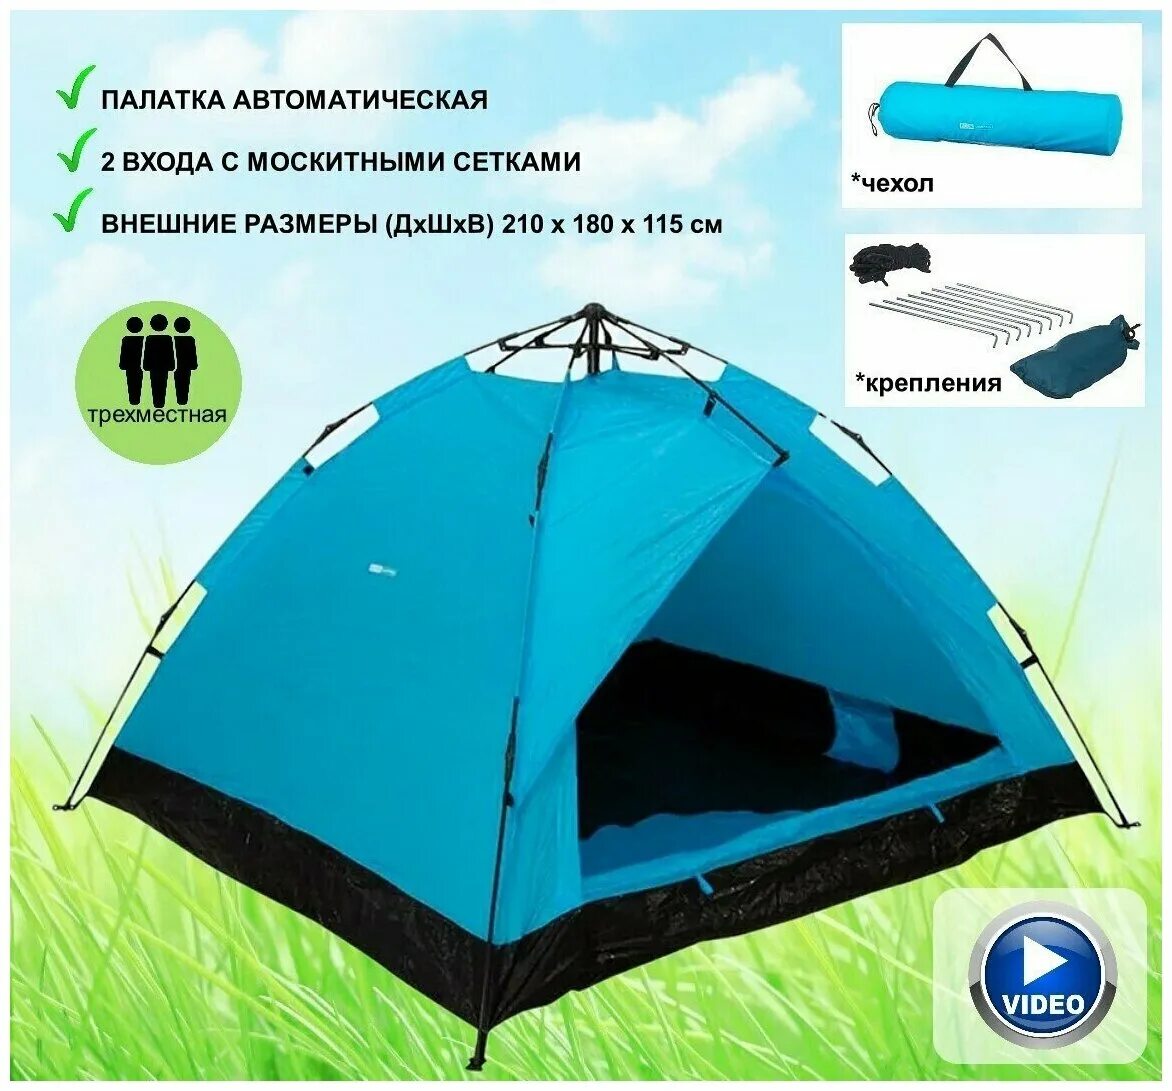 Ecos camping